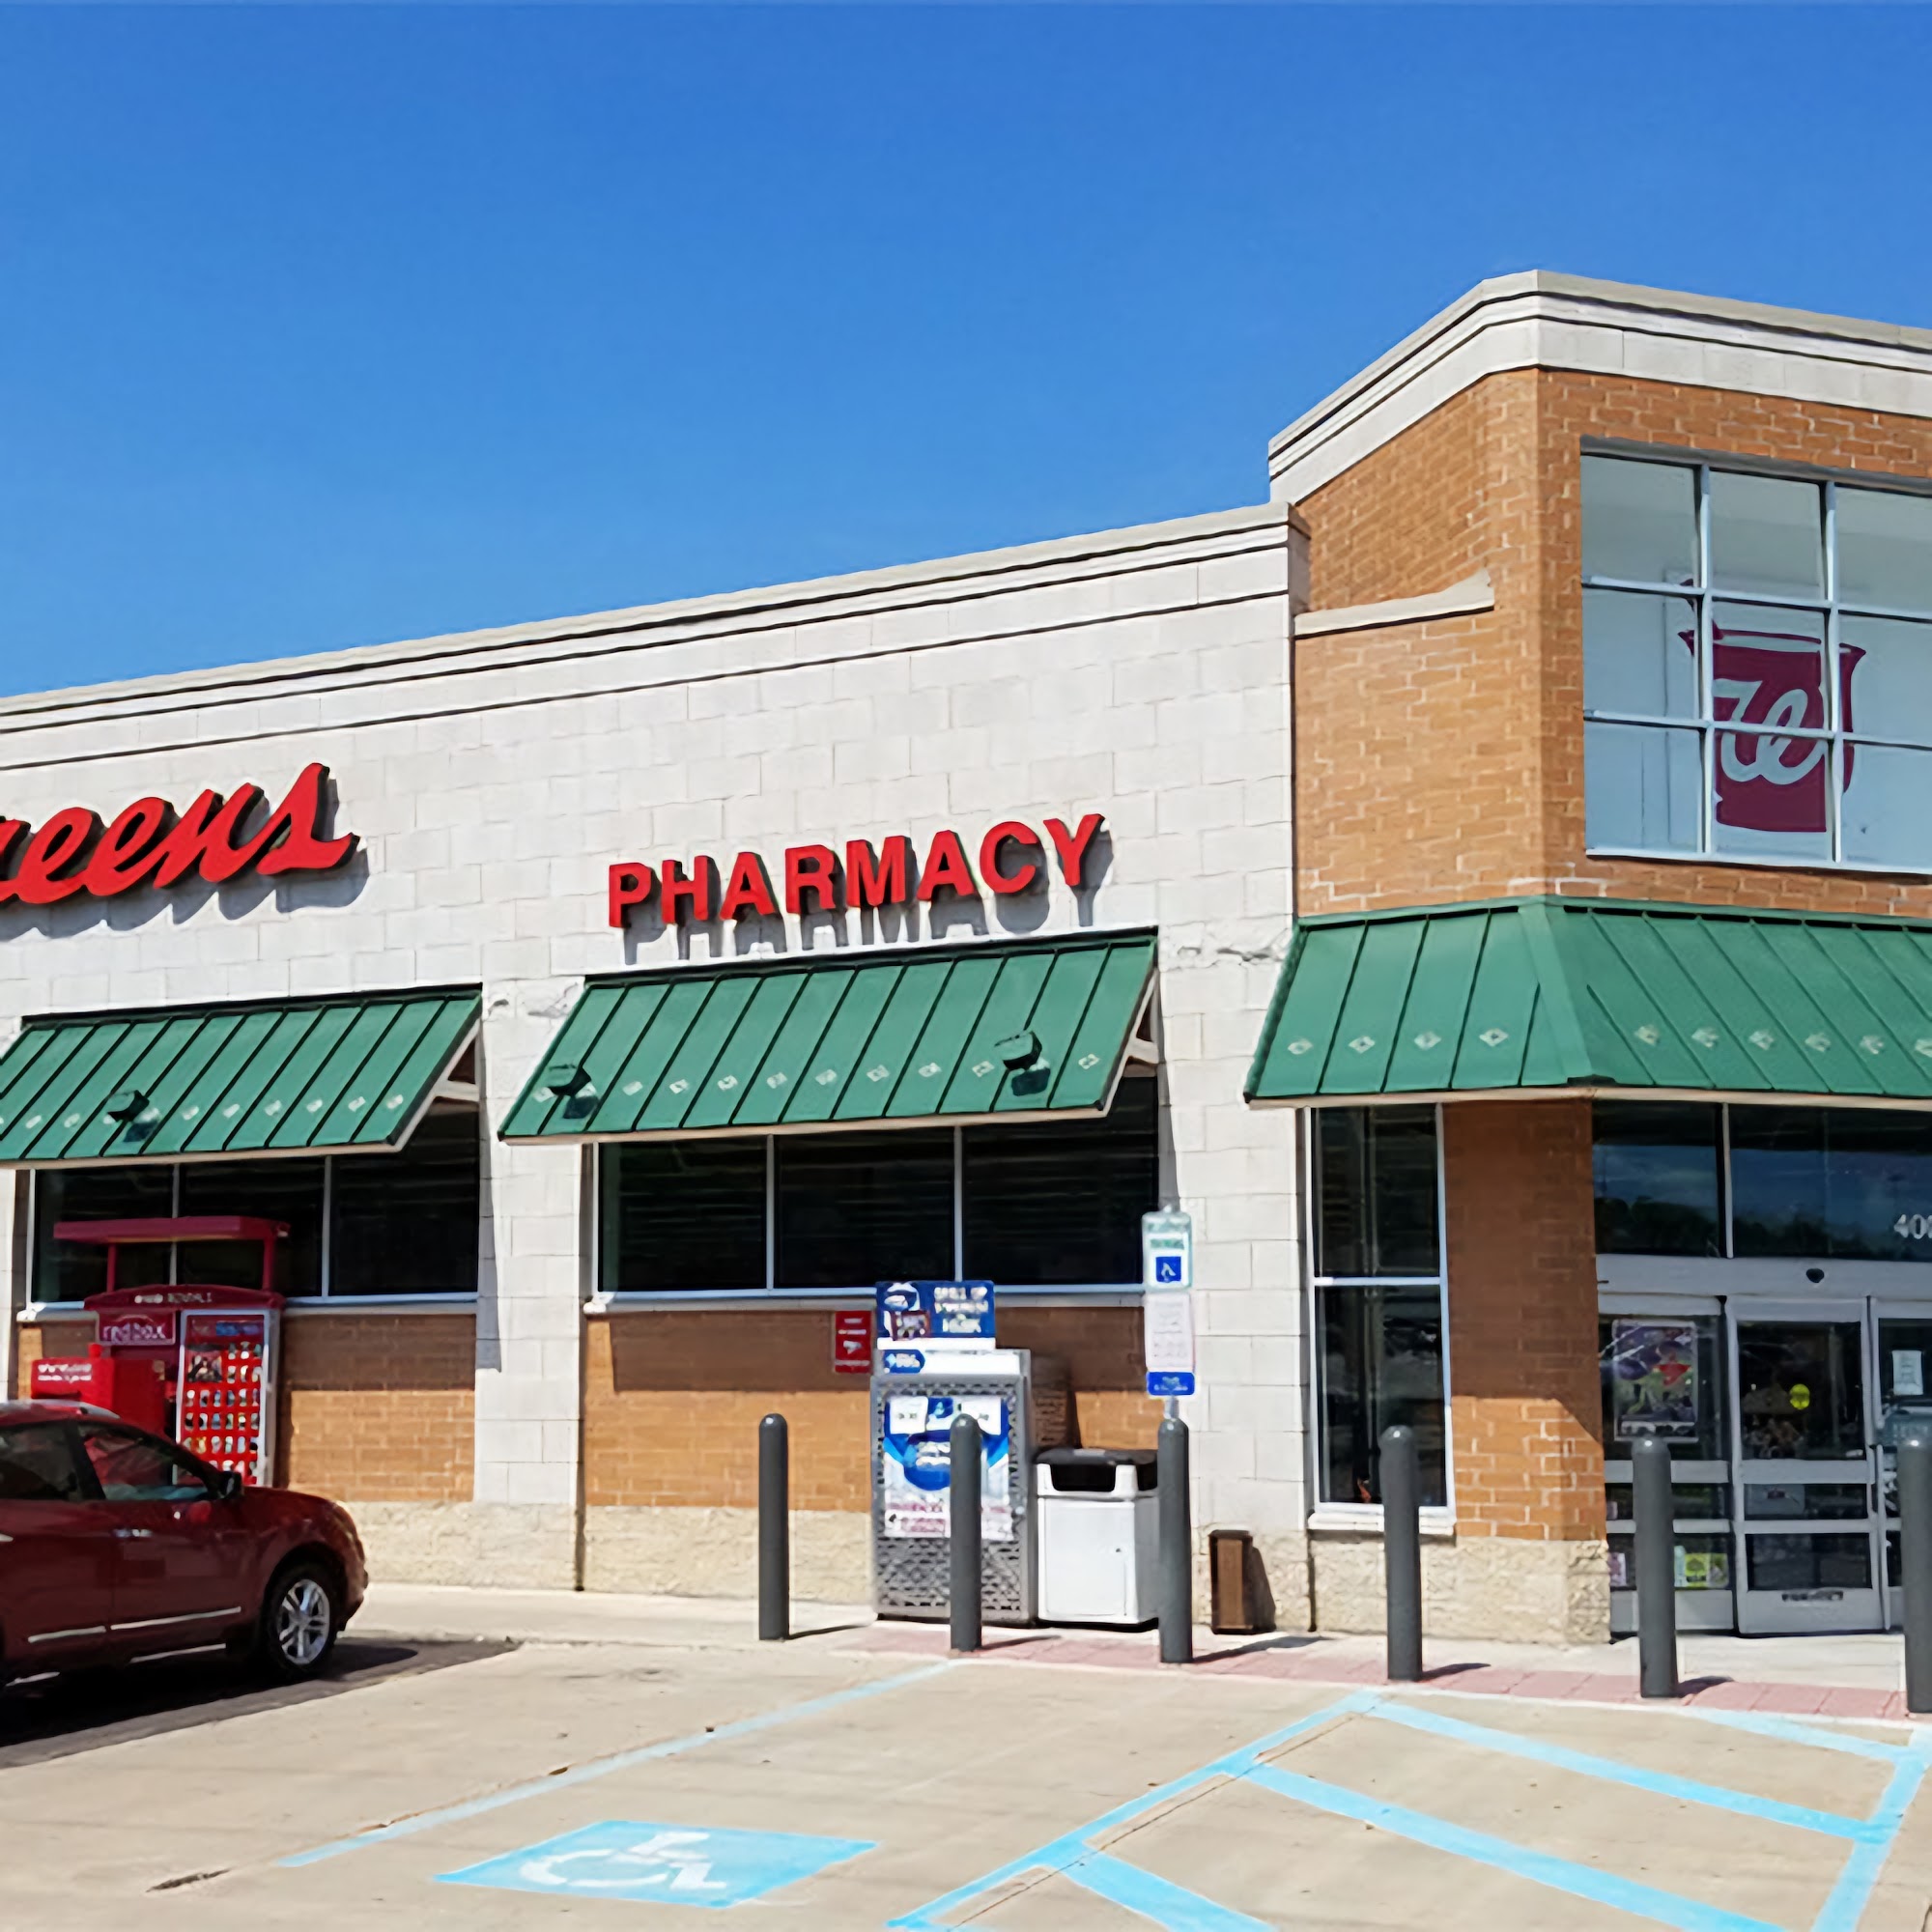 Walgreens Pharmacy